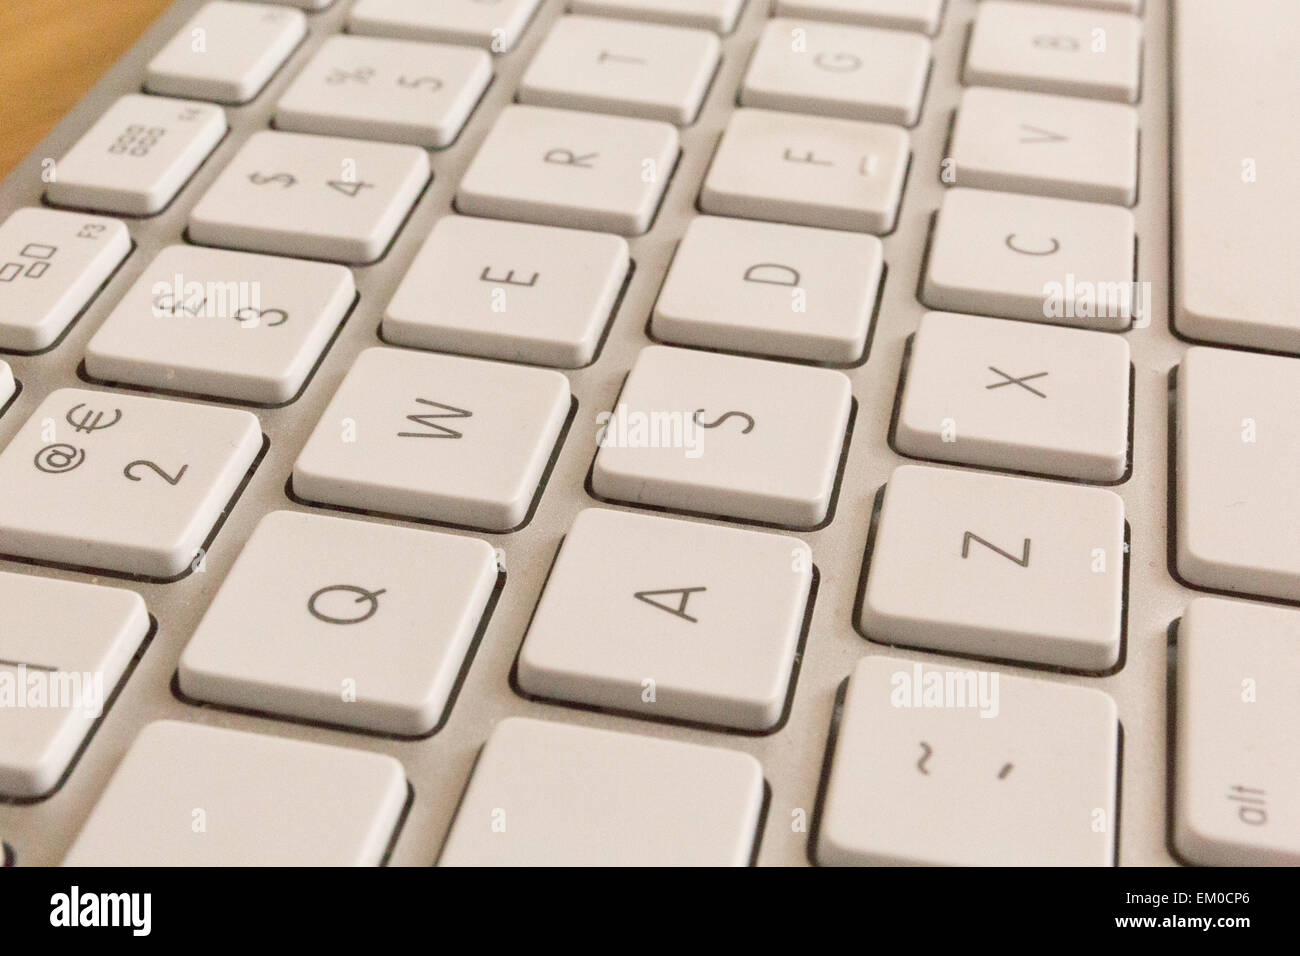 IMac Apple clavier filaire blanc Photo Stock - Alamy